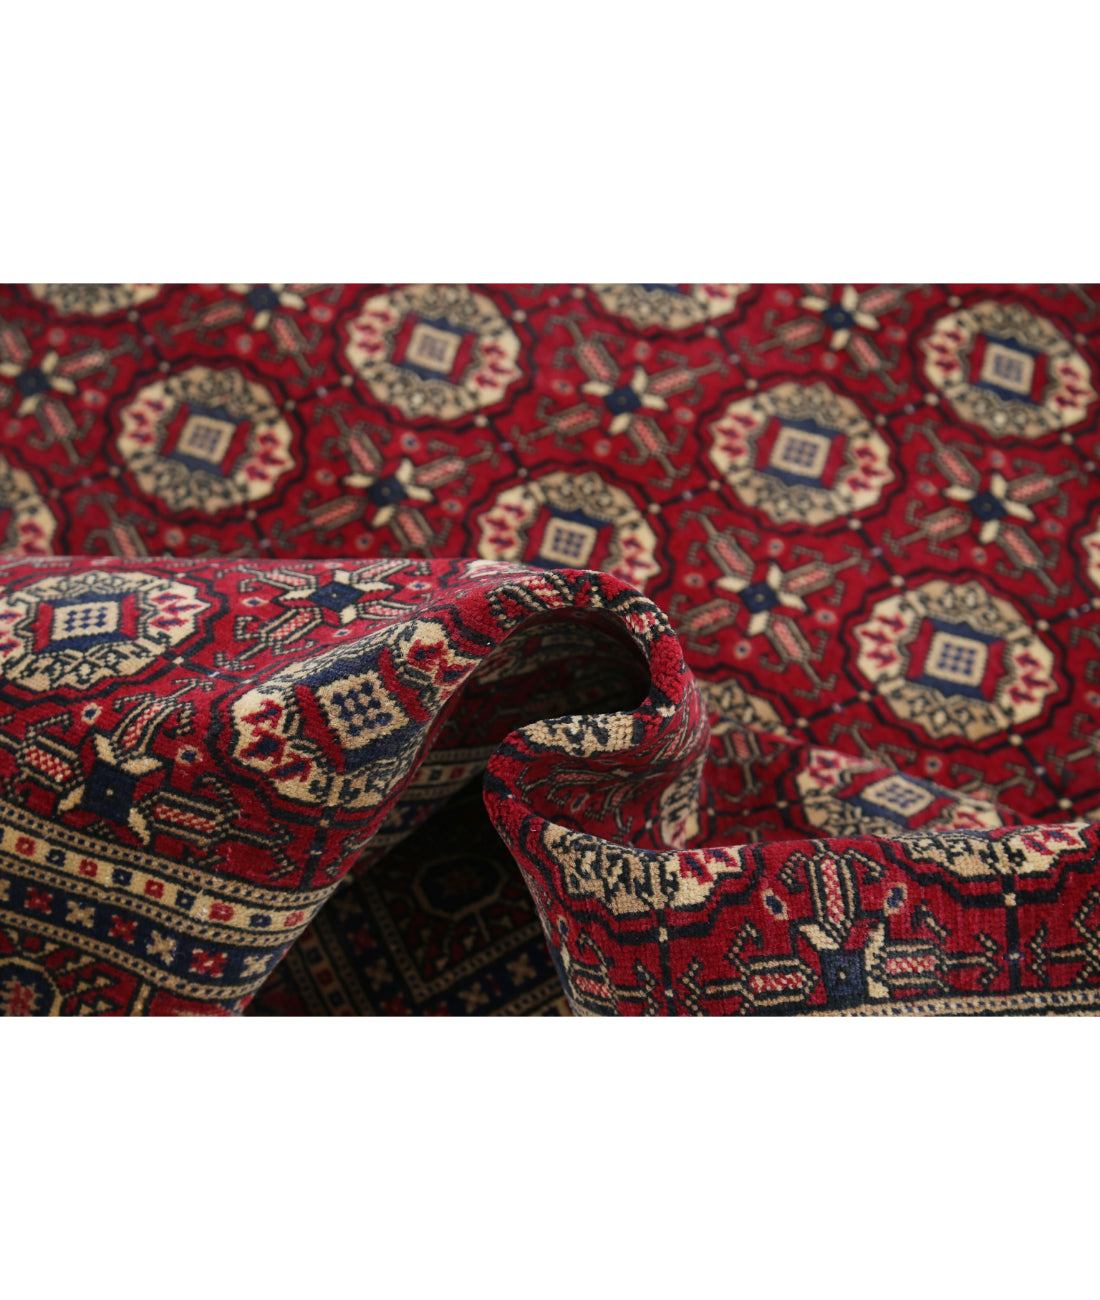 Hand Knotted Vintage Turkish Kayseri Wool Rug - 6'6'' x 9'5'' 6'6'' x 9'5'' (195 X 283) / Red / Blue